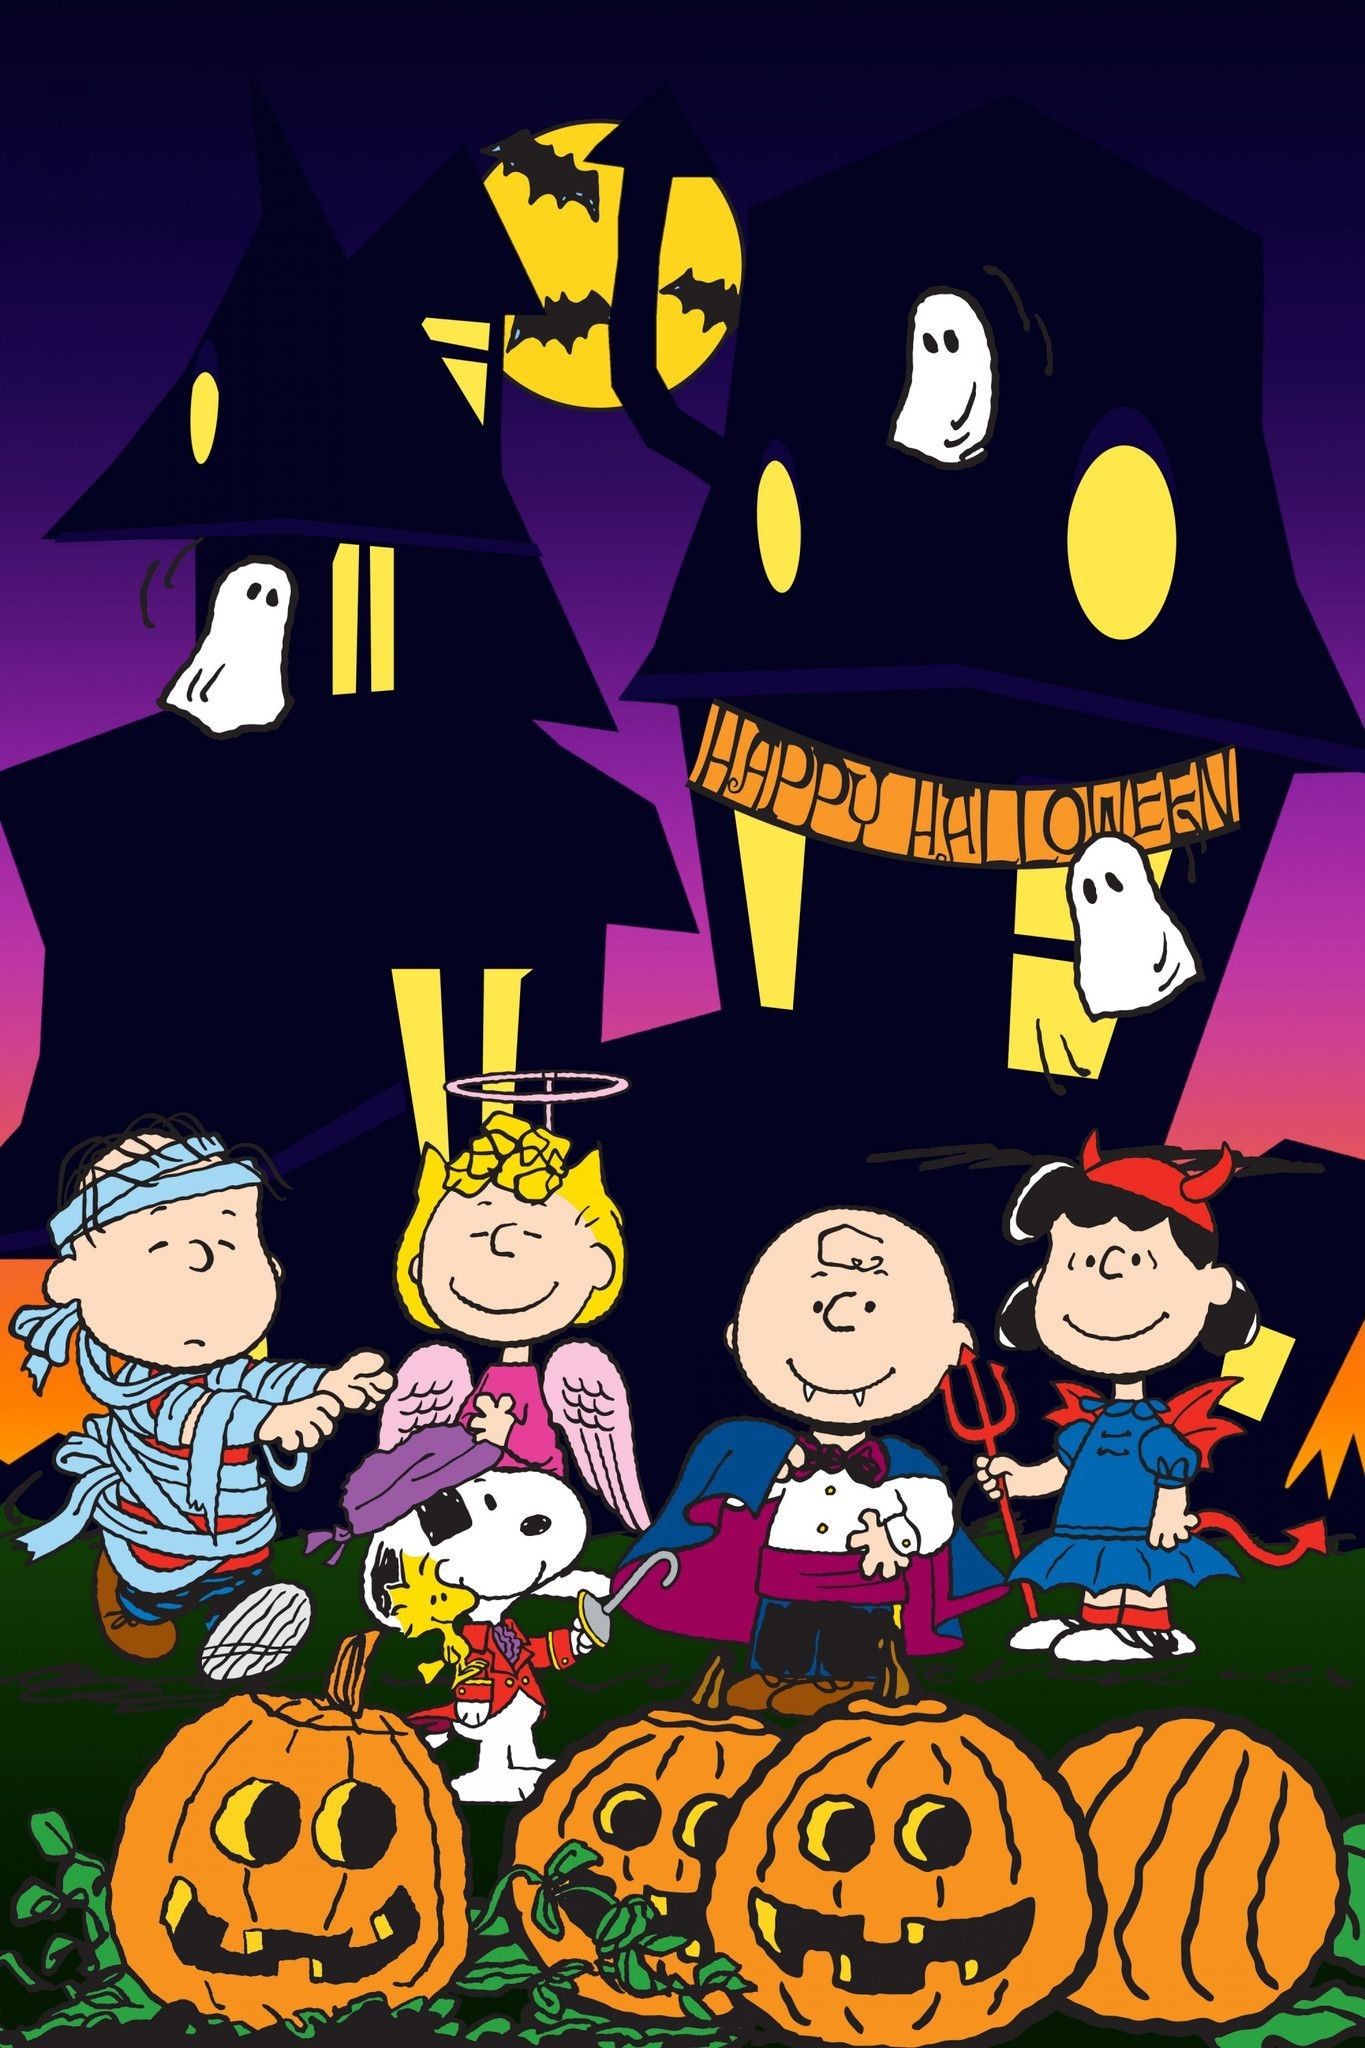 Download Peanuts Halloween Data Src W Full 3 3 2 51209 Pumpkin Charlie Brown 2018 For Deskt. Snoopy Halloween, Charlie Brown Halloween, Peanuts Halloween